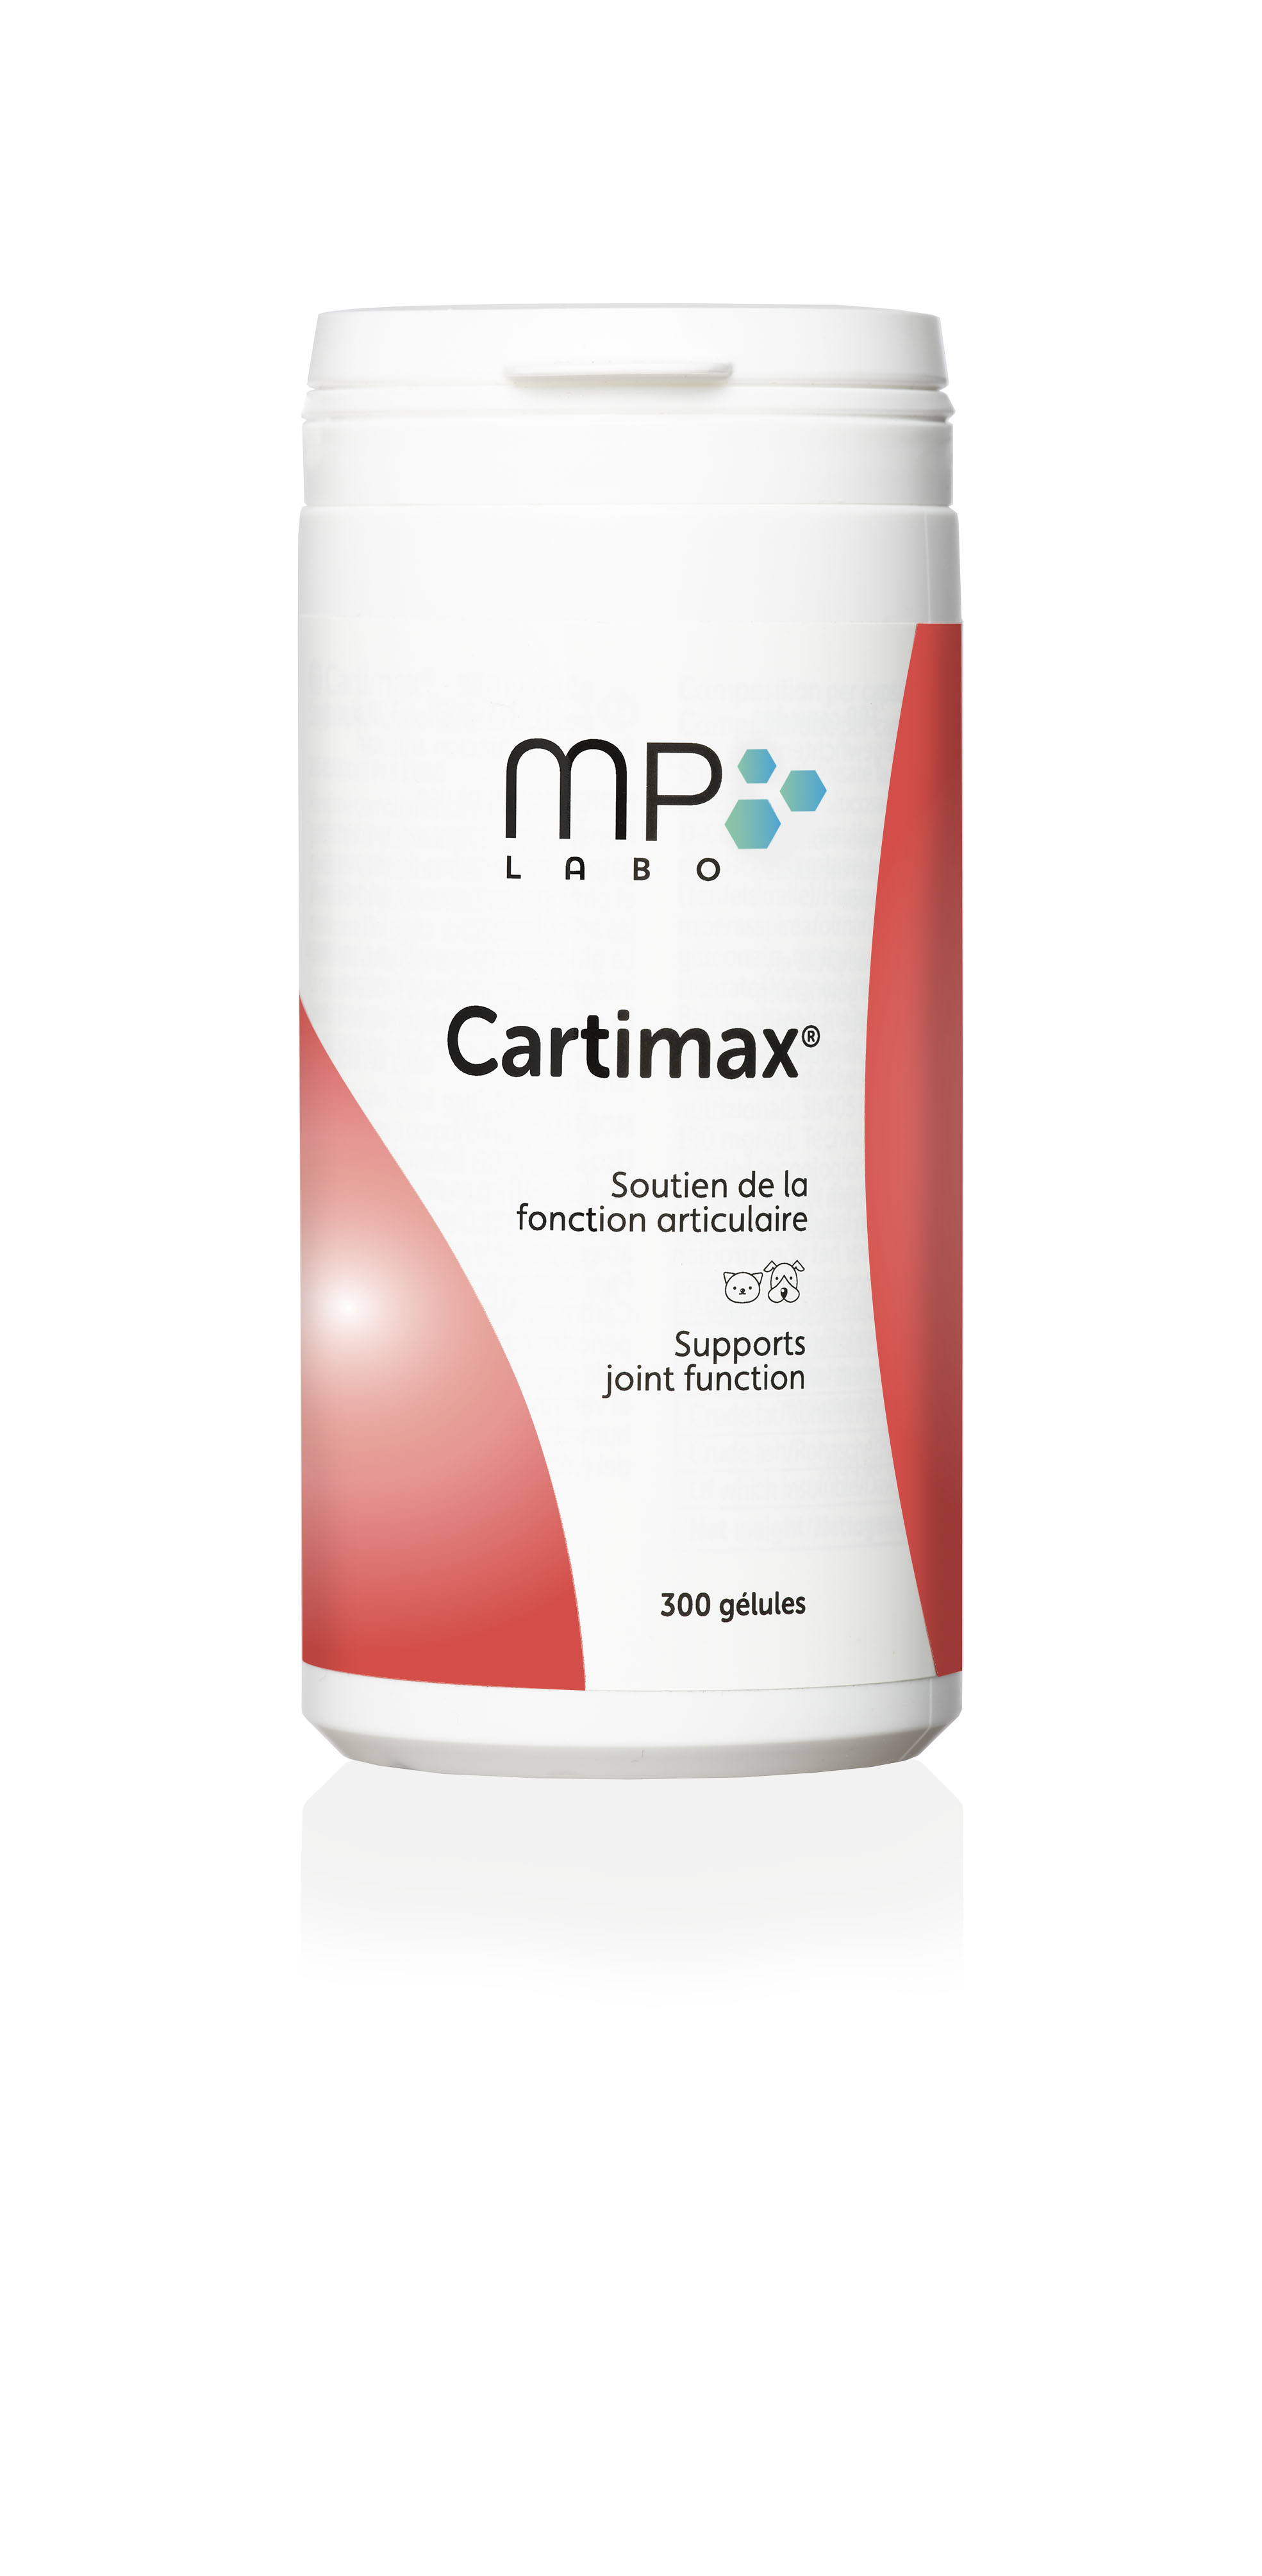 Cartimax® - Med'Vet